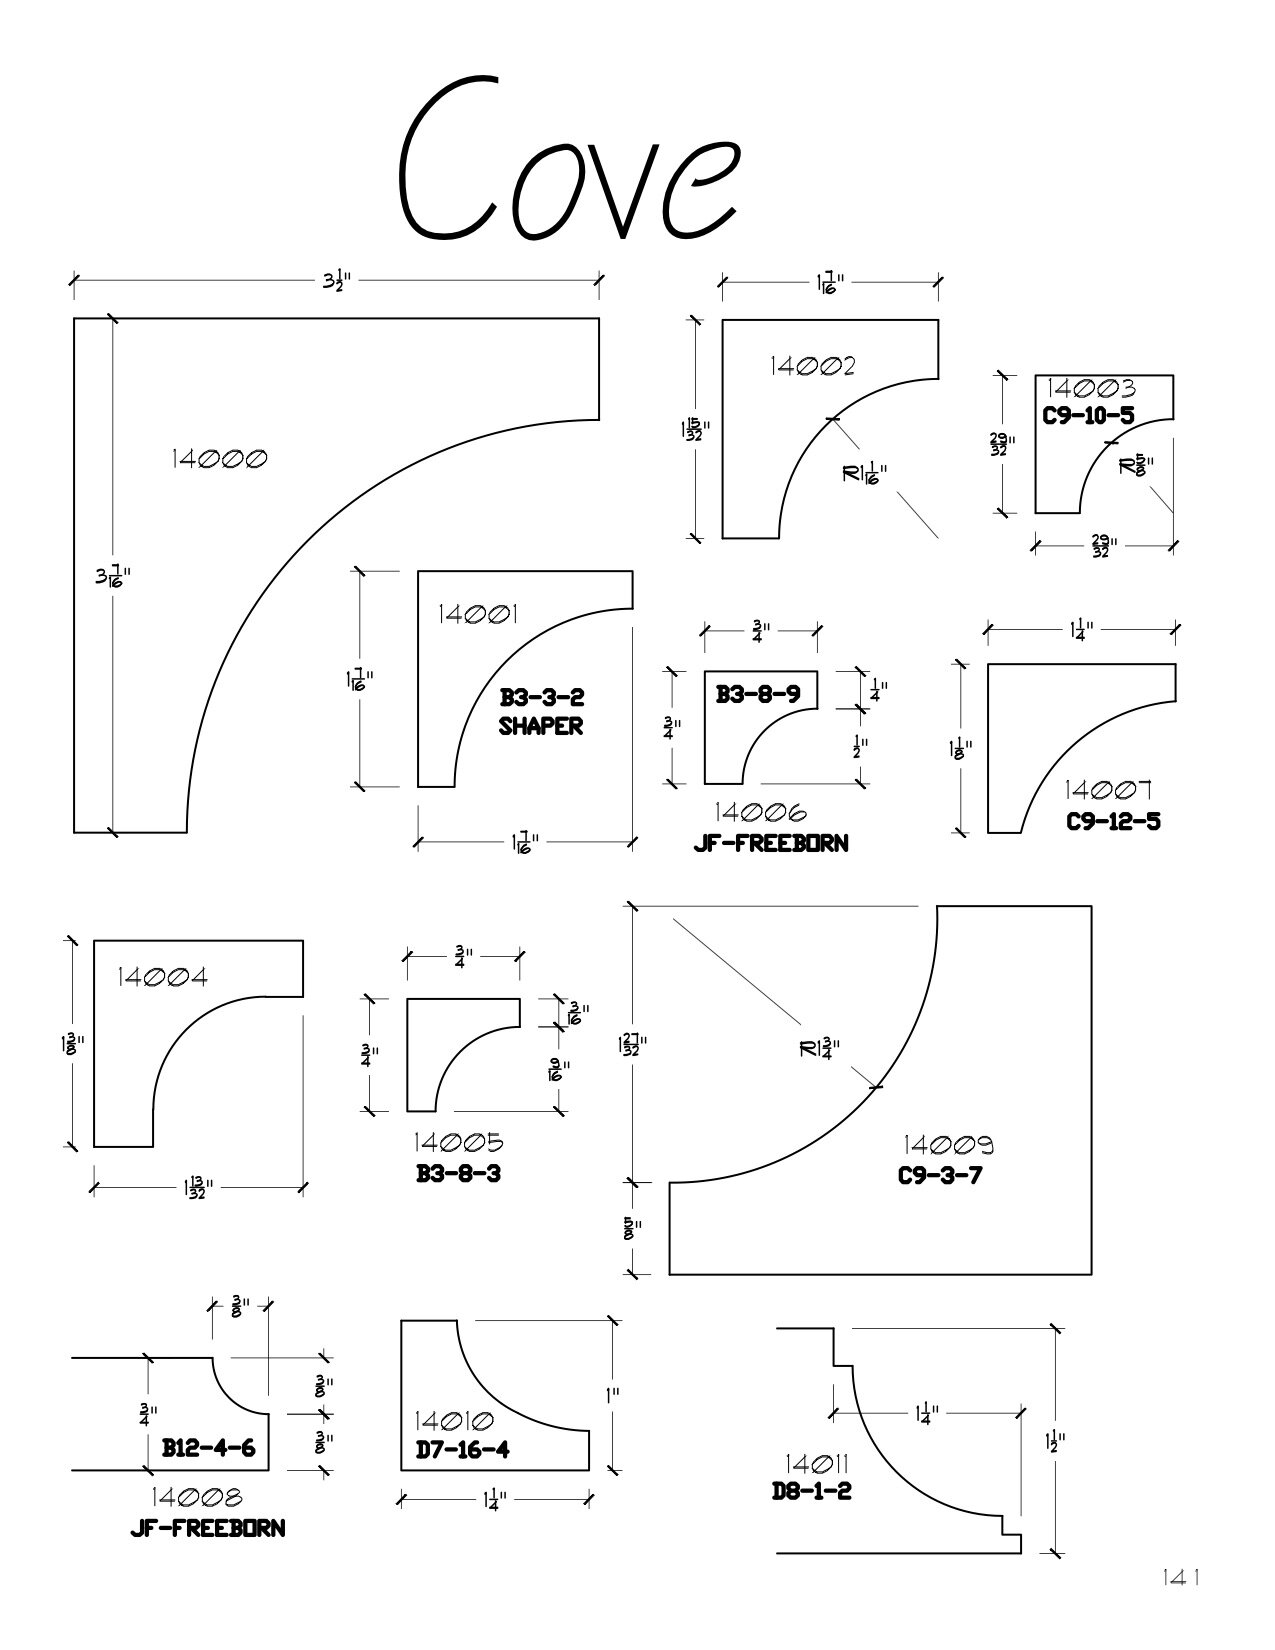 Cove PDF (Copy)